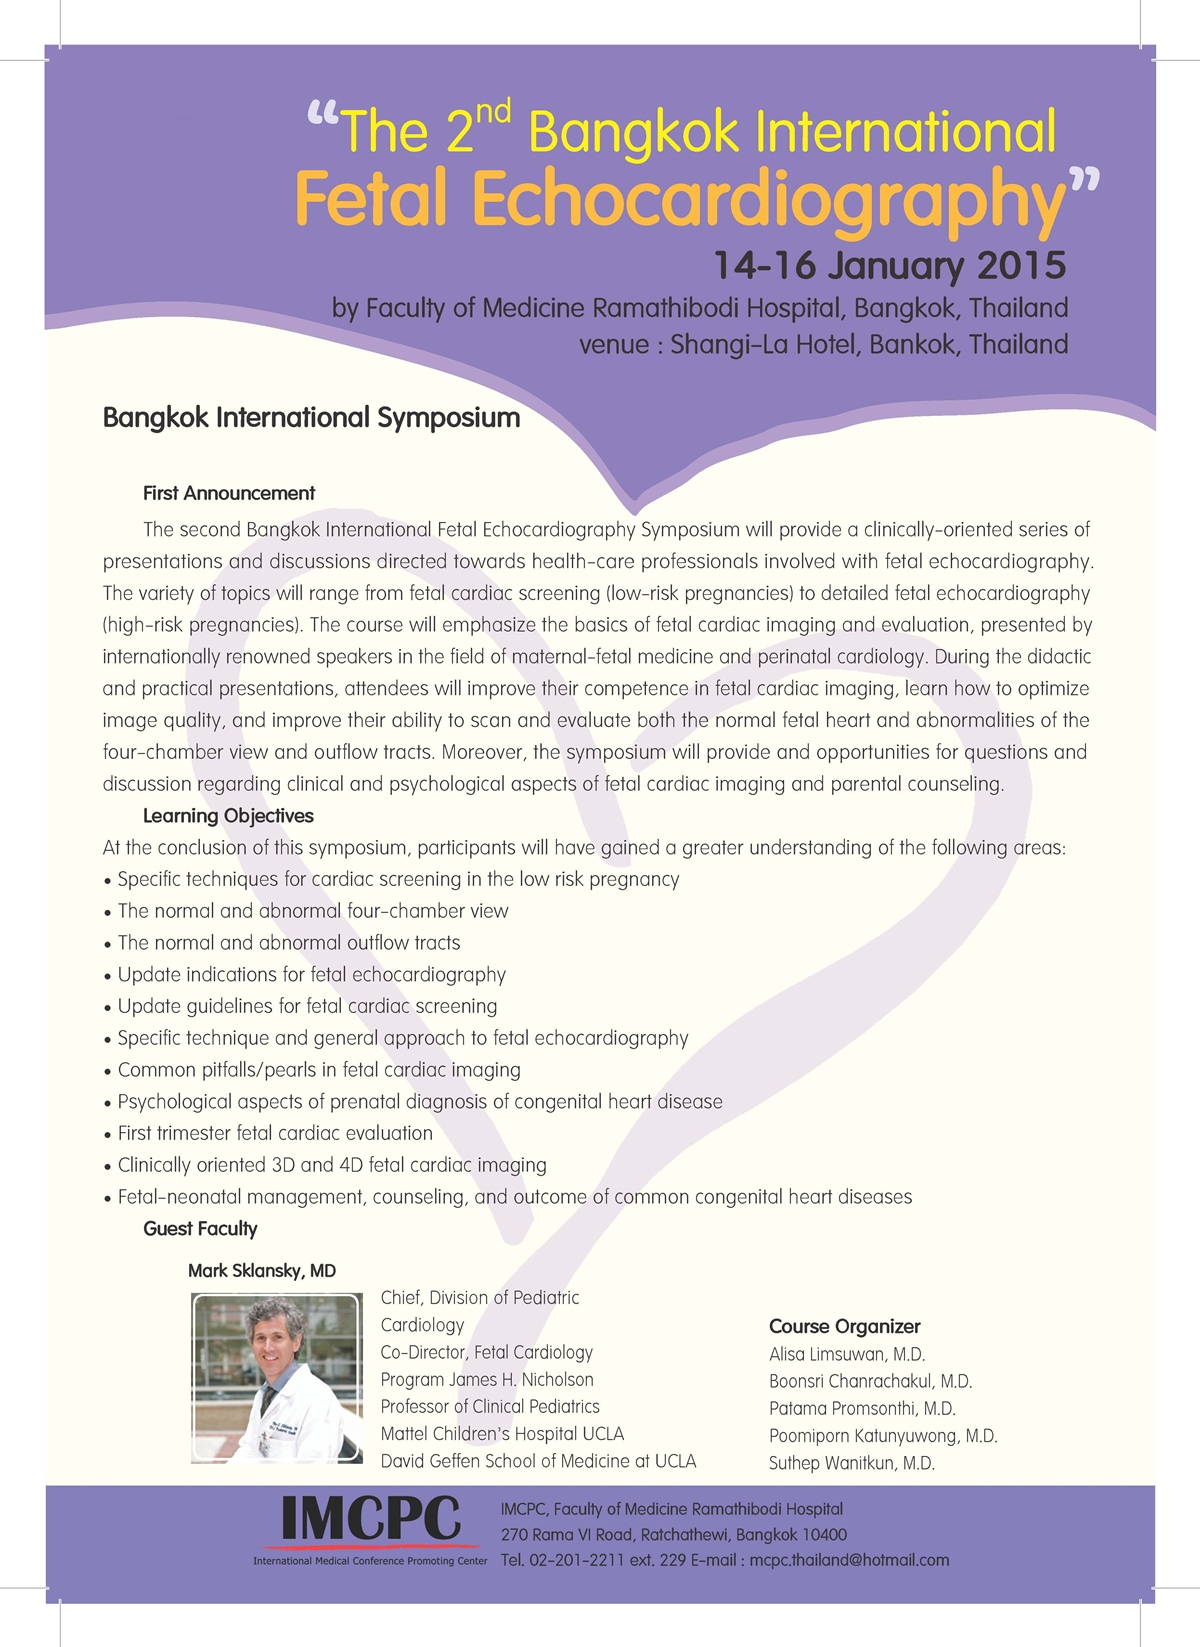 The 2nd Bangkok International Fetal Echocardiography